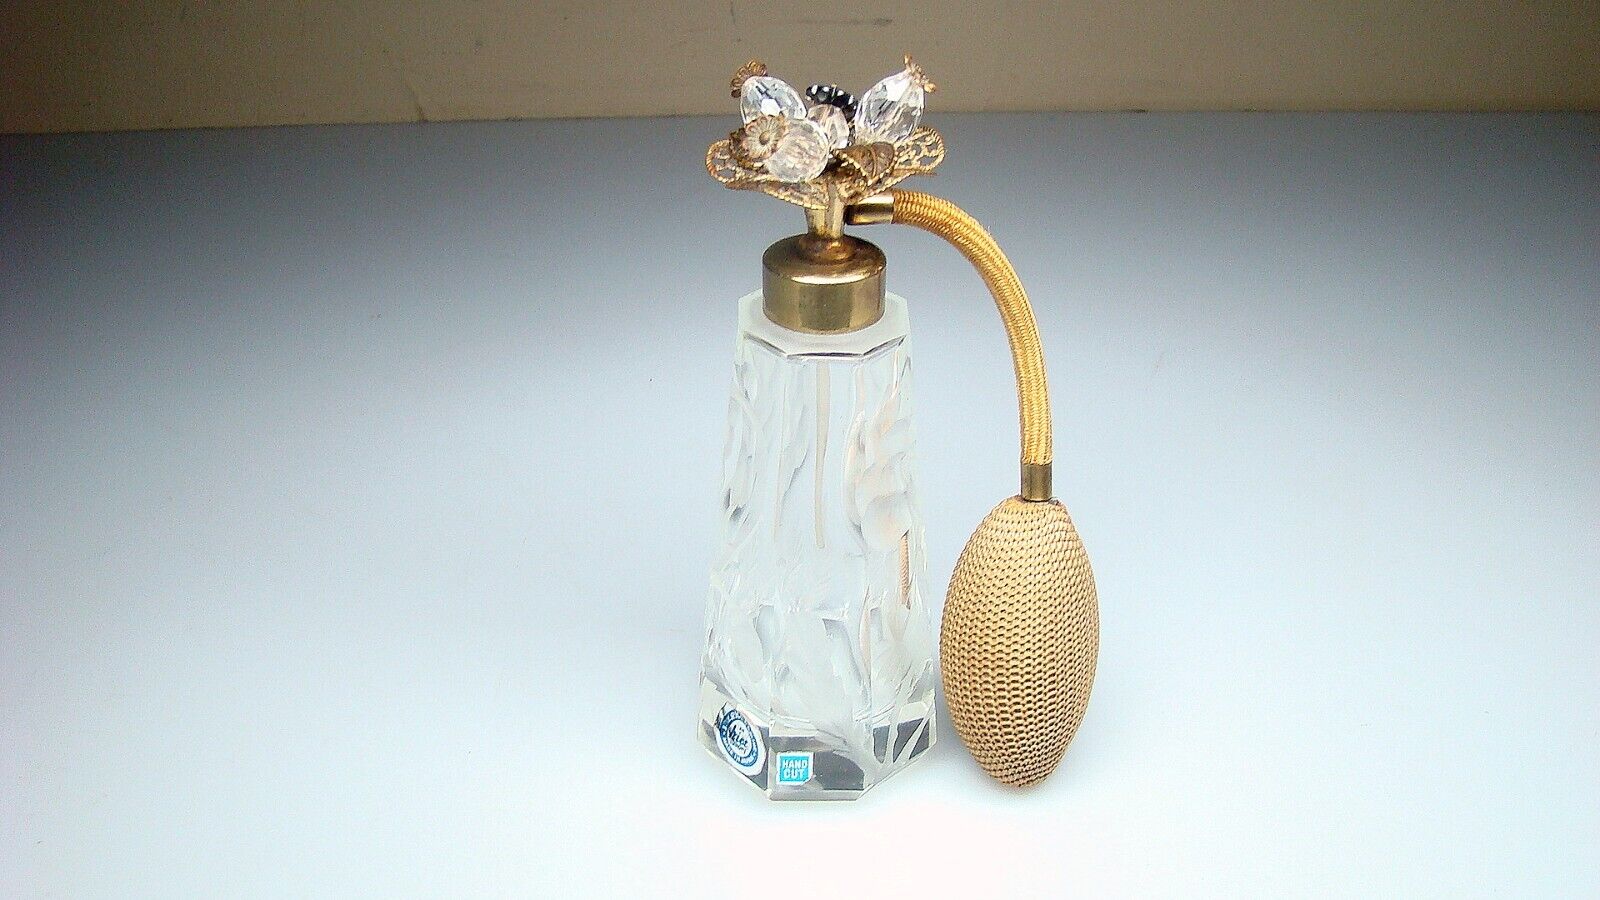 Ornate I.W. Rice Irice Vintage Perfume Bottle with Jeweled Filigree Top & Label